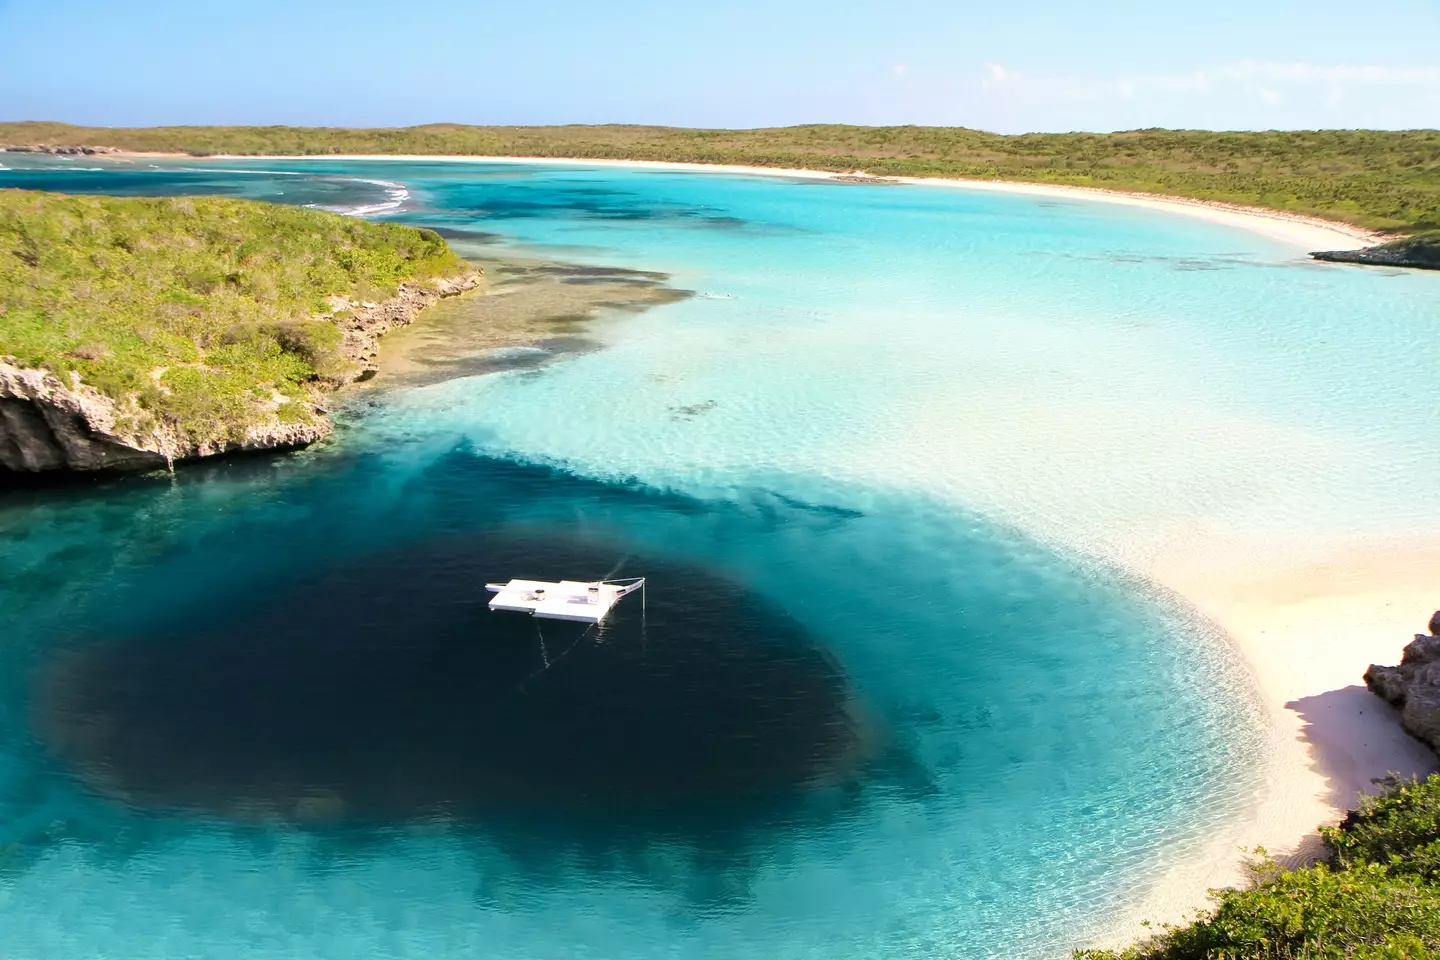 The 663ft deep Bahamian sinkhole is 'virtually unexplored'. (Enn Li Photography/Getty Images)